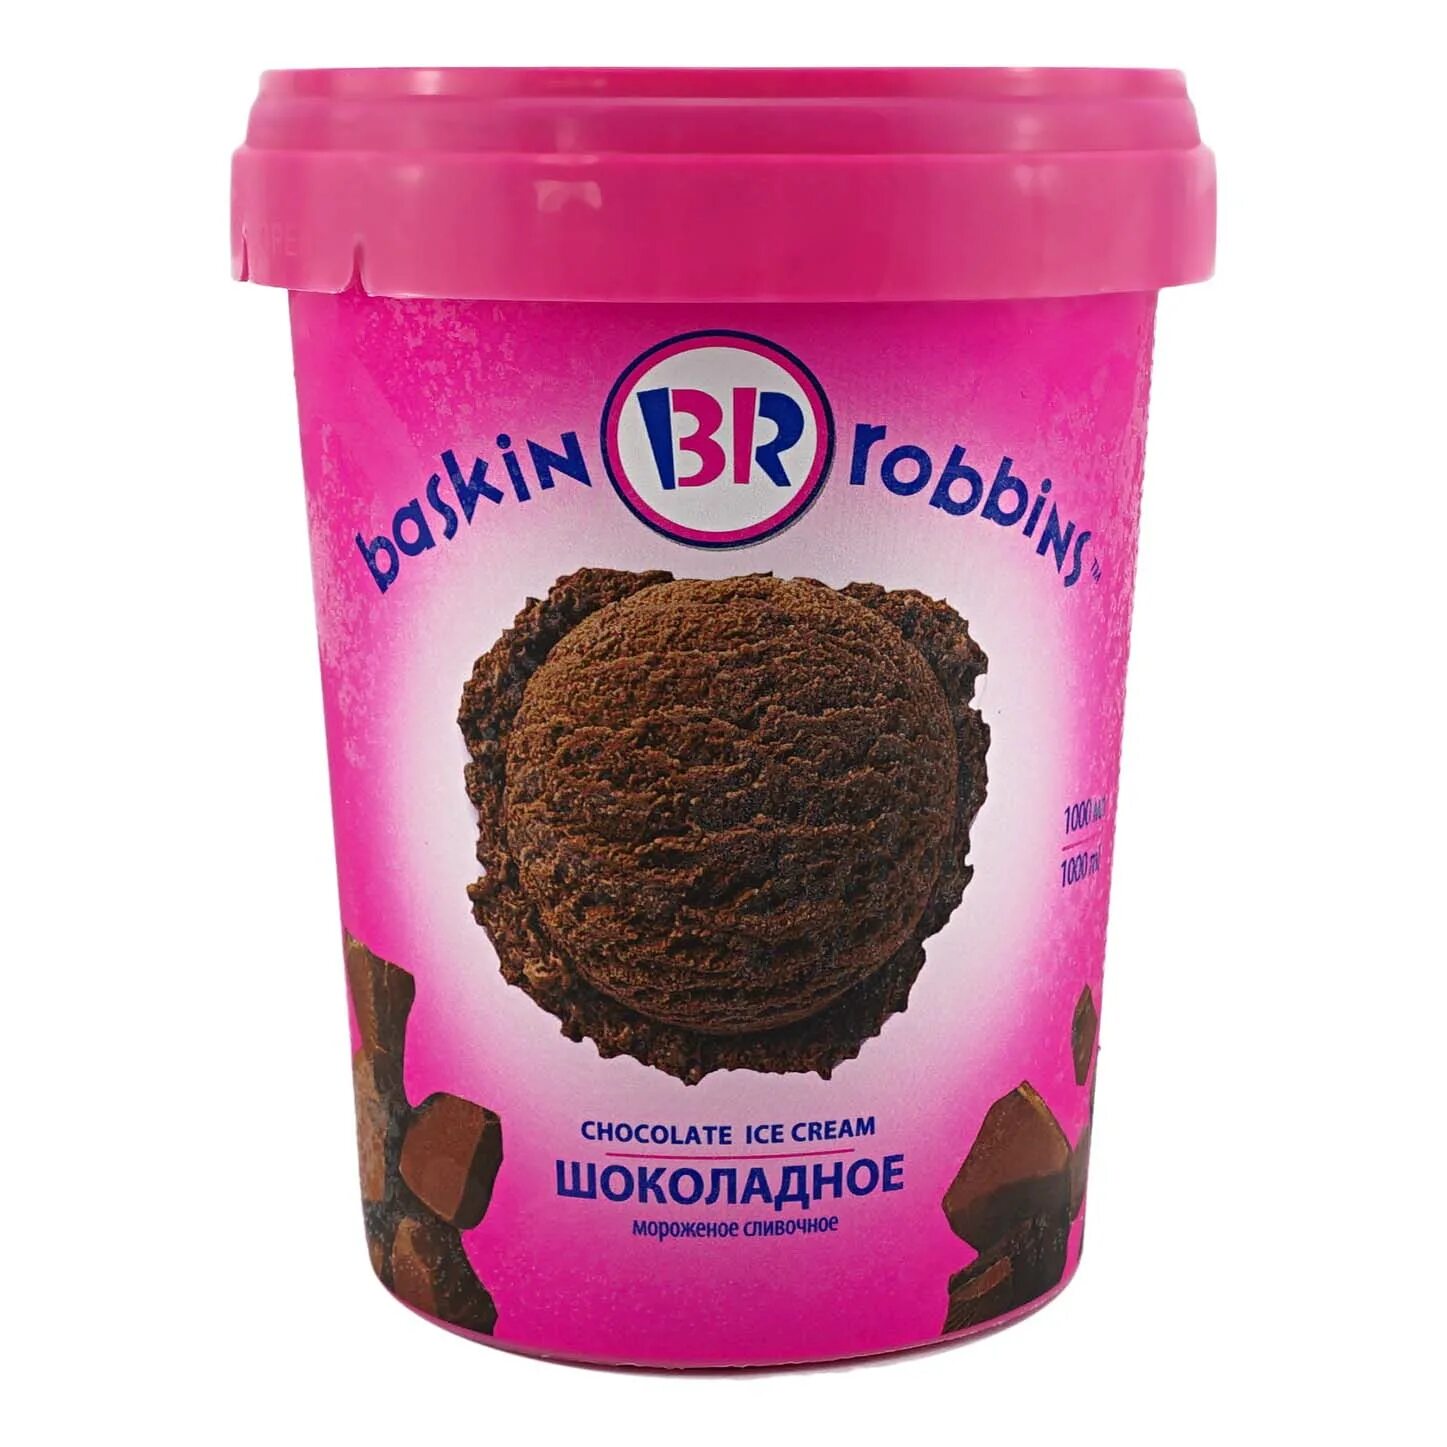 Мороженое Баскин Роббинс шоколадное 1000мл. Баскин Роббинс мороженое шоколадное. Баскин Роббинс 1000 мл. Баскин Роббинс мороженое 1000 мл. Мороженое в баночке